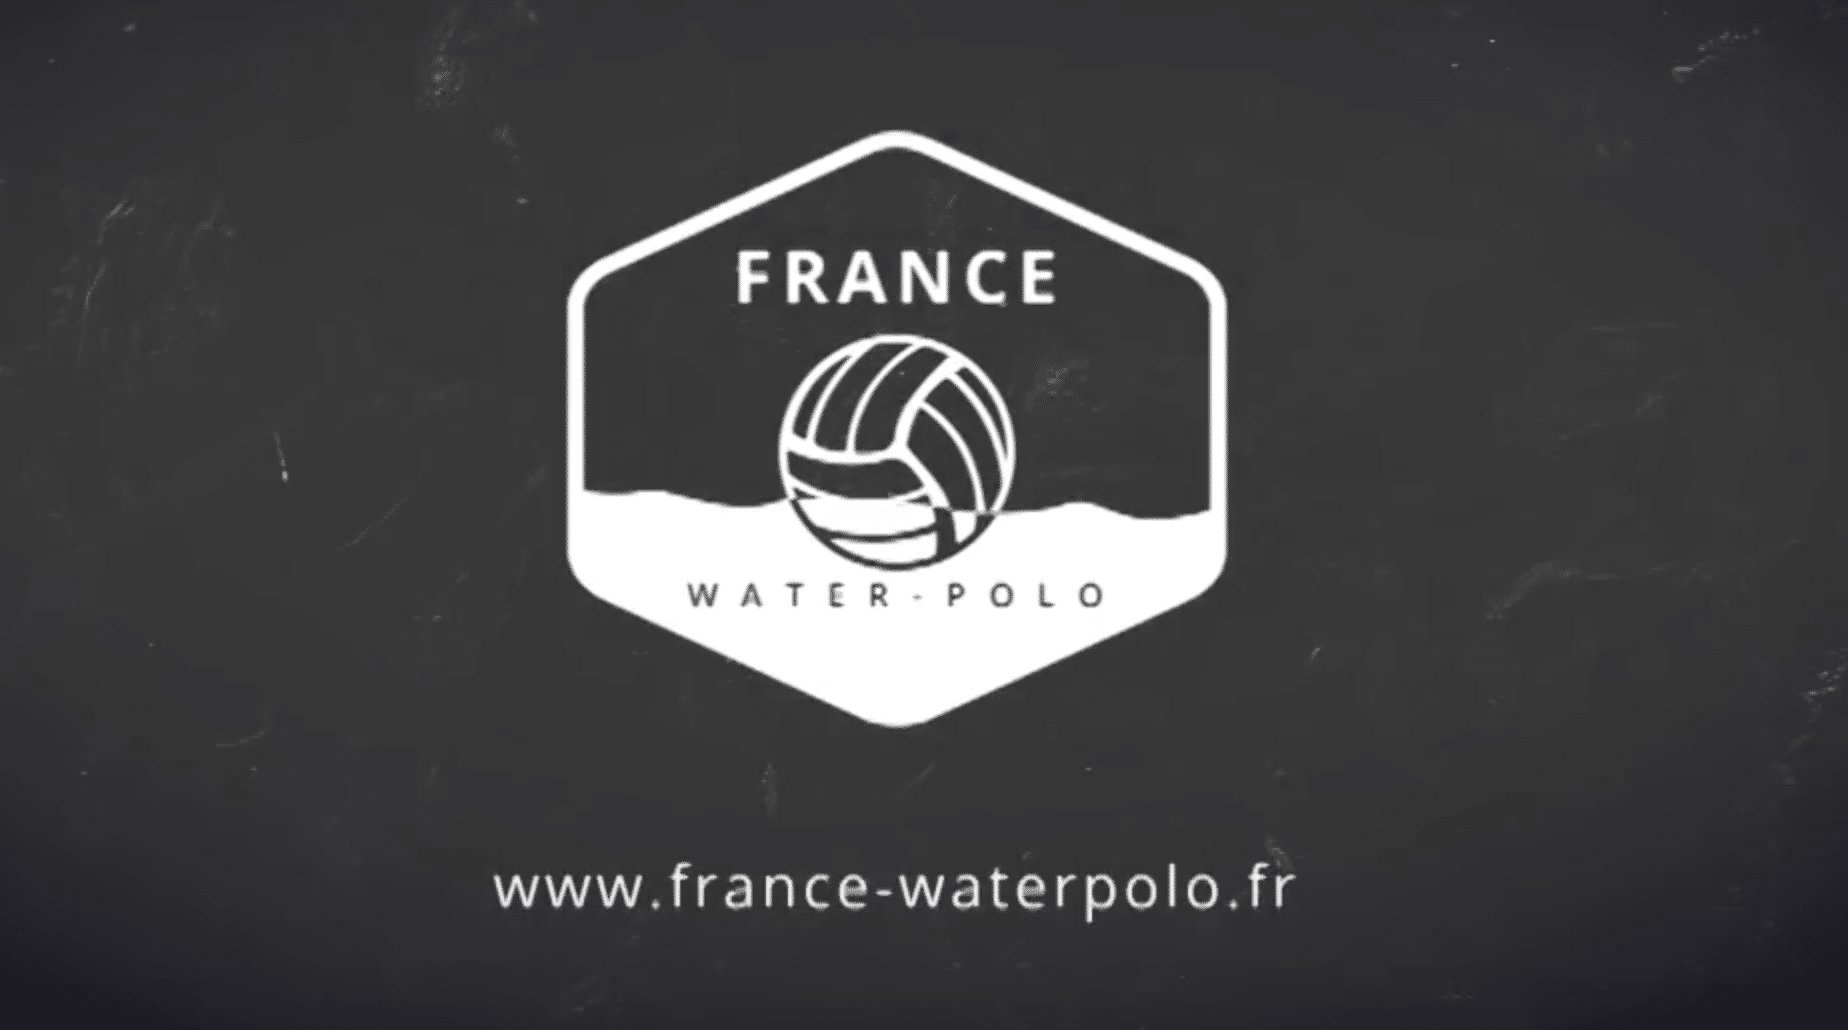 water-polo-france-banc-pensif